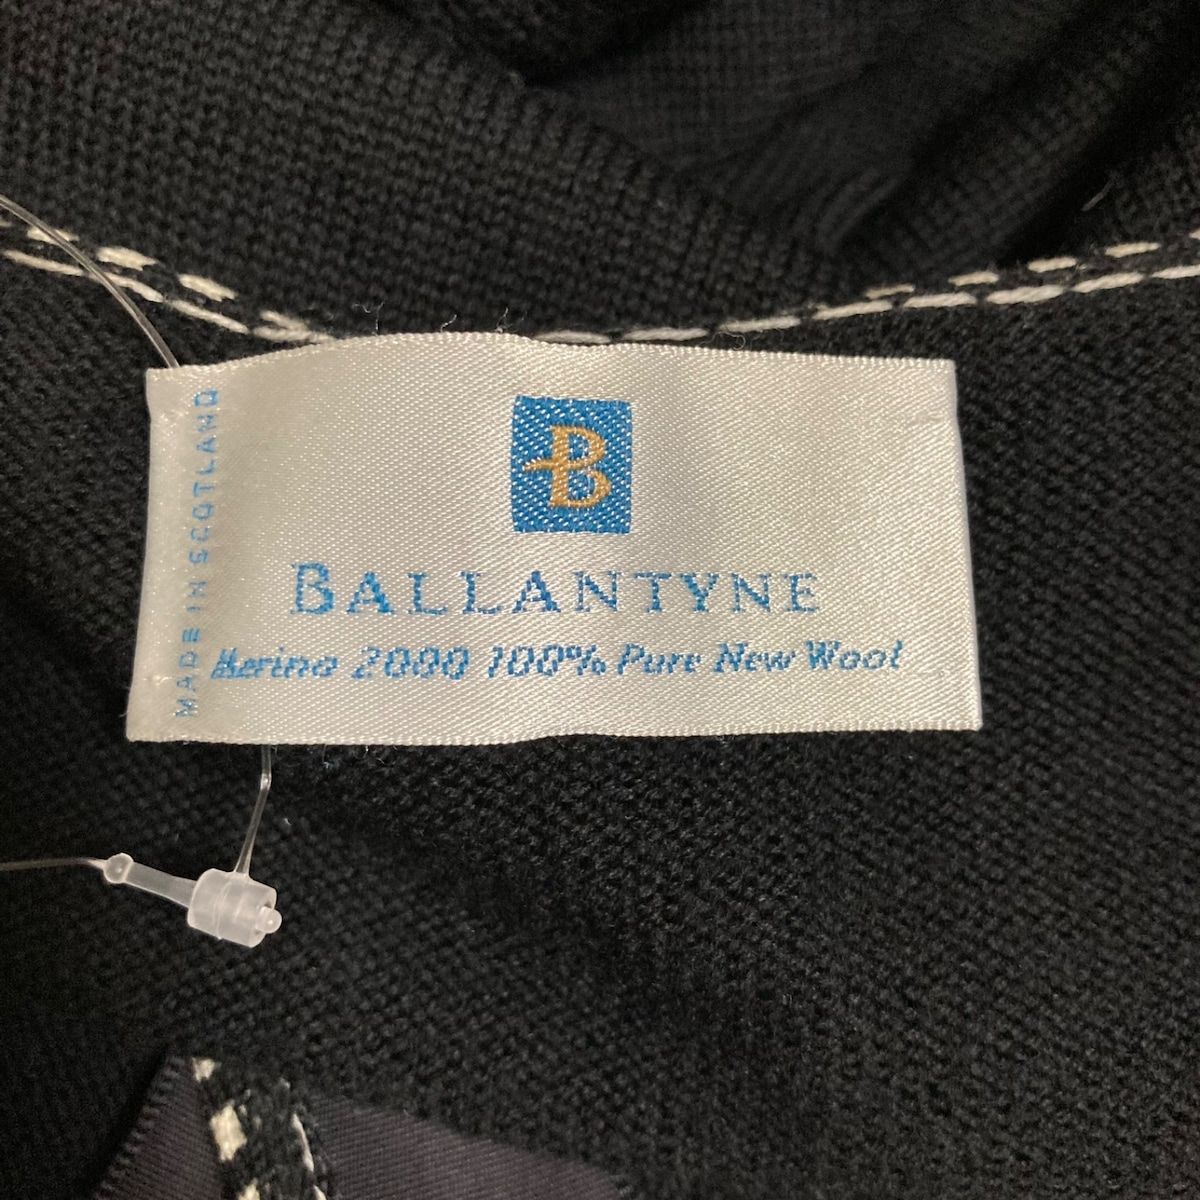 Ballantyne(バランタイン) カーディガン サイズ5 XS レディース - 黒 